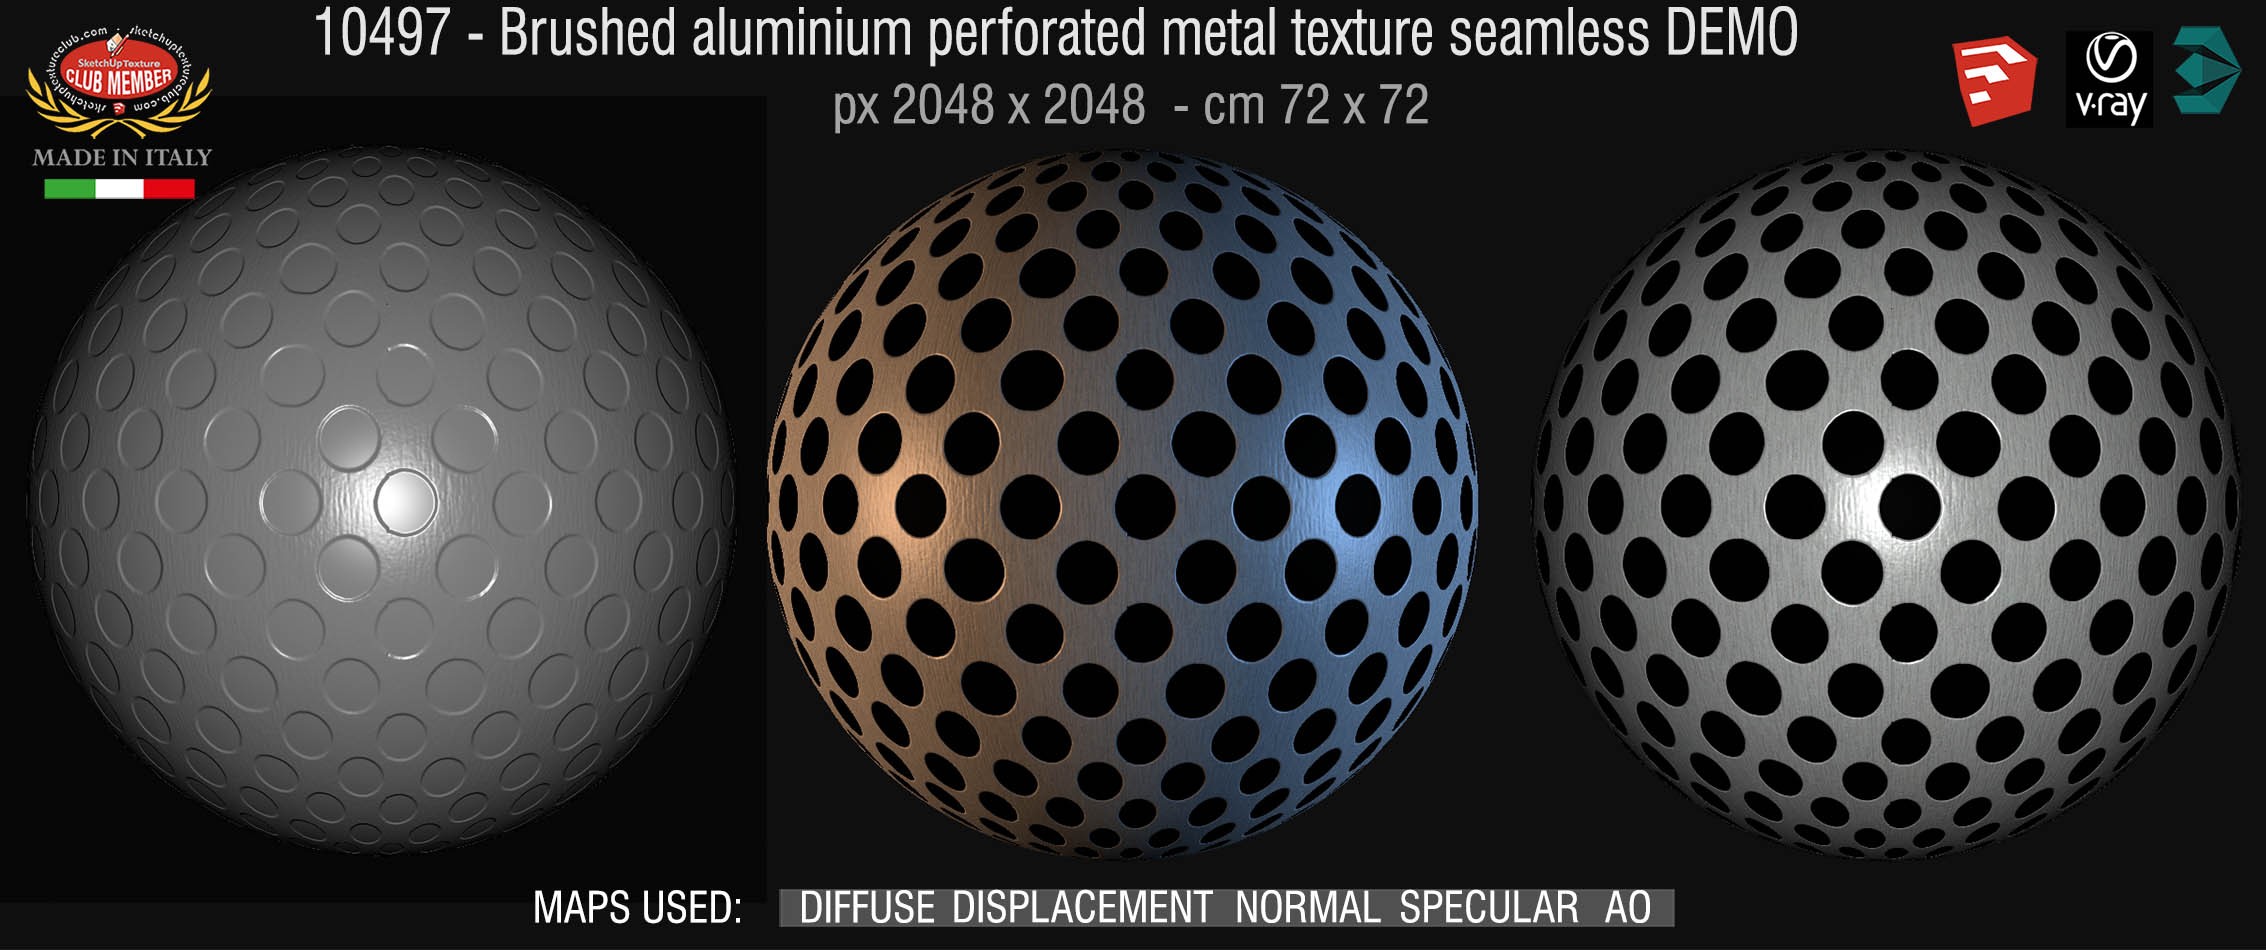 10497 HR Brushed aluminium perforated metal texture seamless + maps DEMO